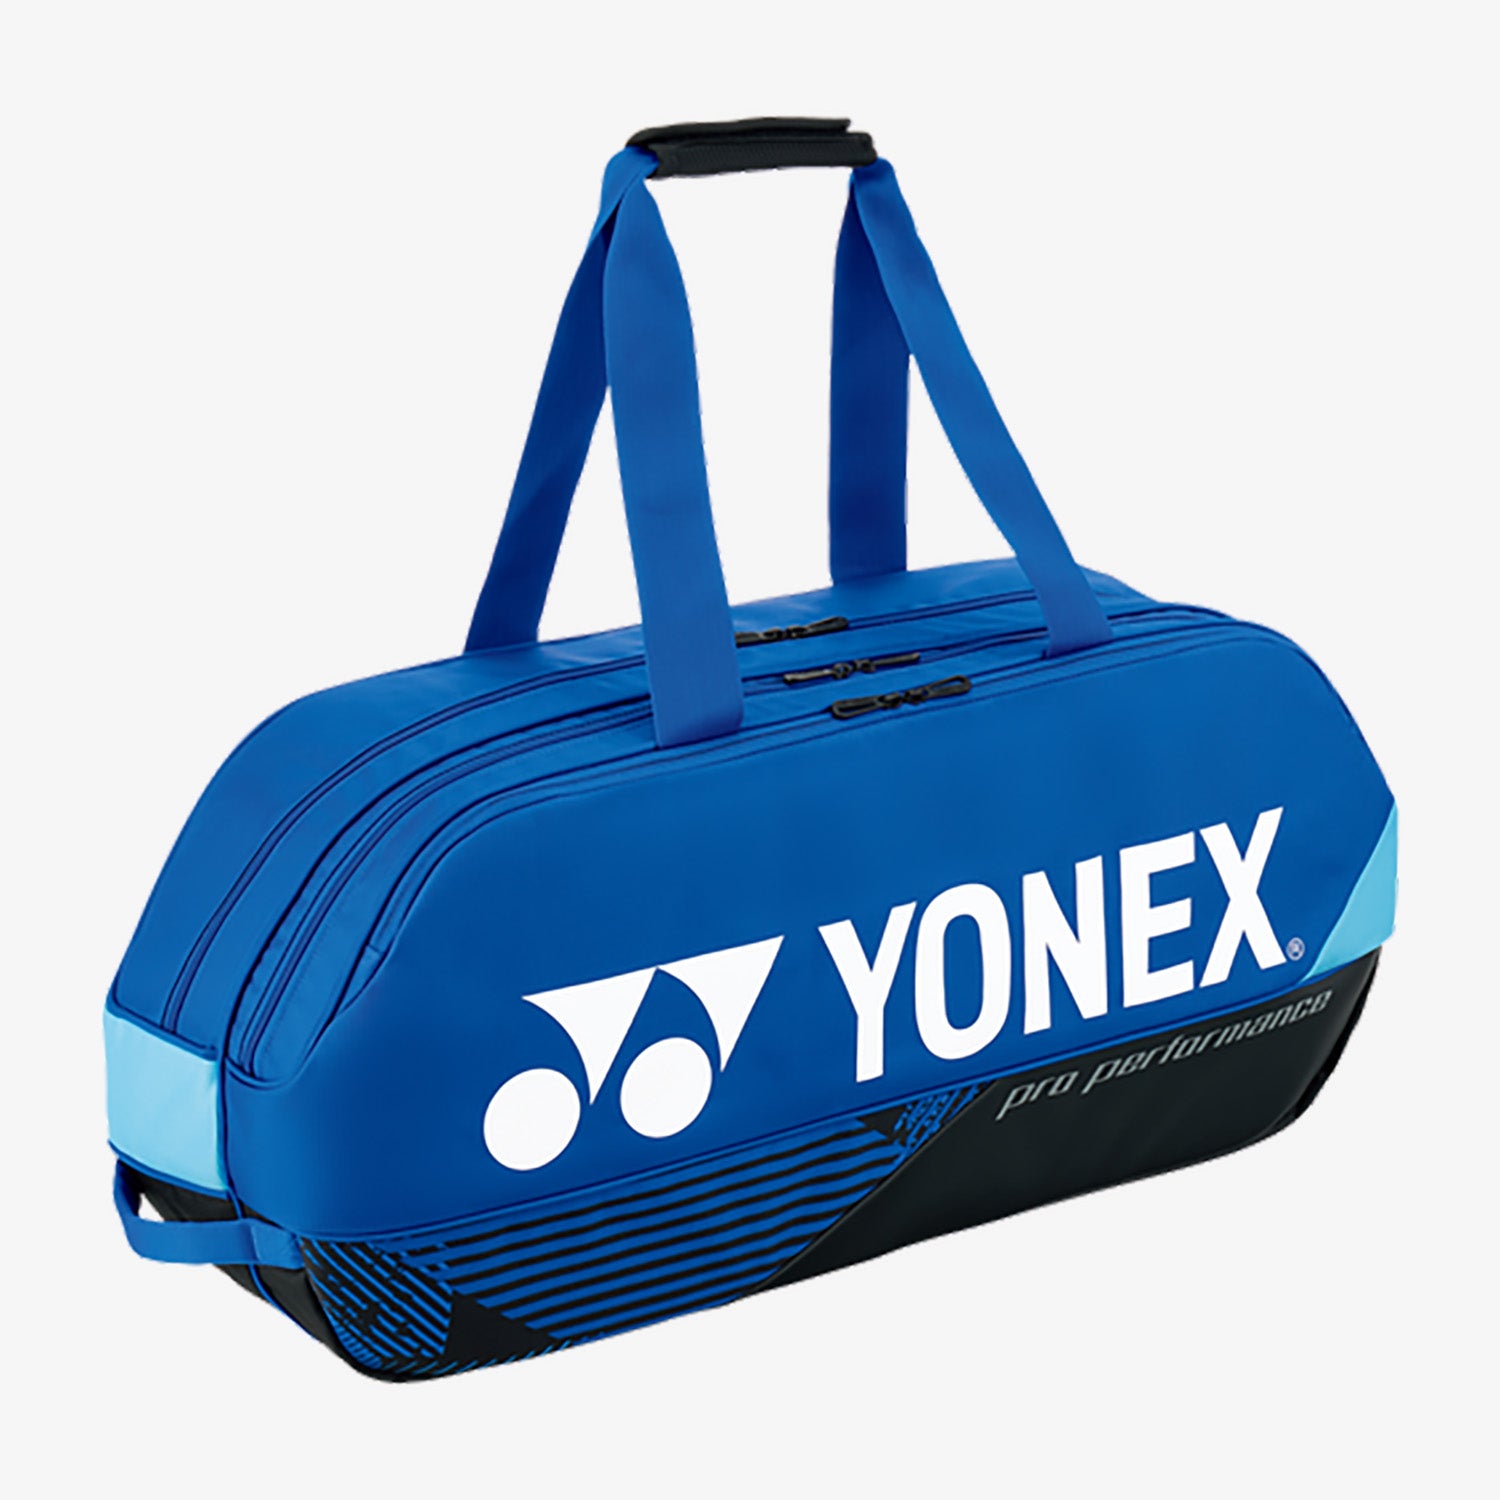 Yonex BAG92431WCOBL (Cobalt Blue) 6pk Pro Tournament Badminton Tennis Racket Bag 